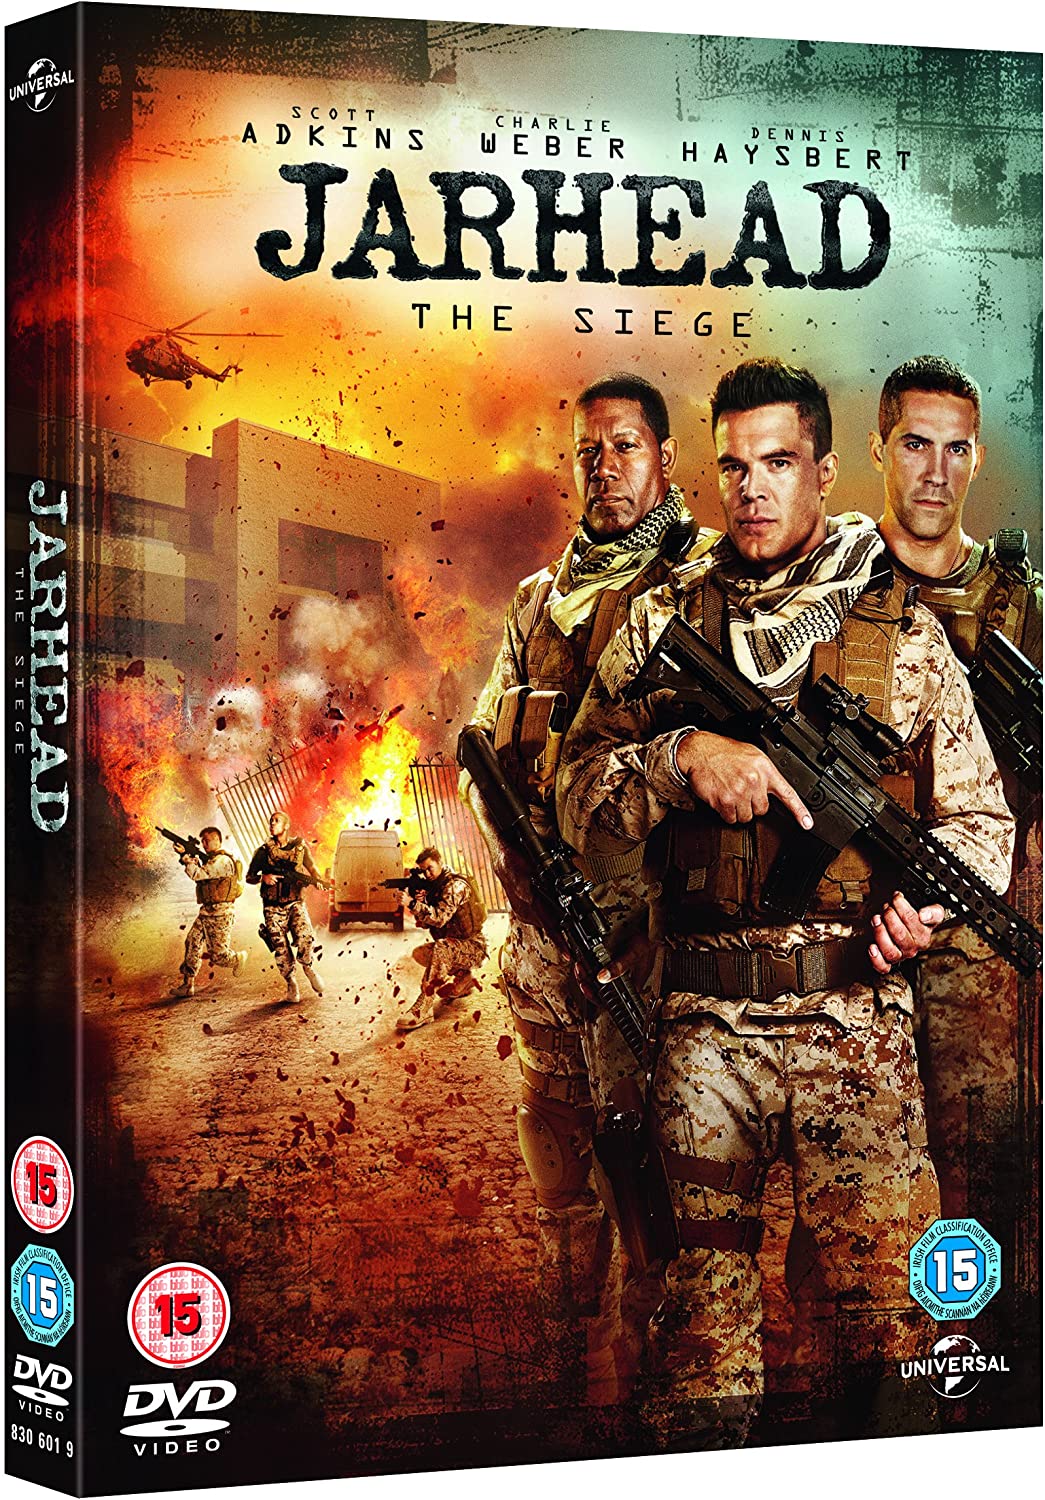 Jarhead: The Siege [2016] – Krieg/Action [DVD]